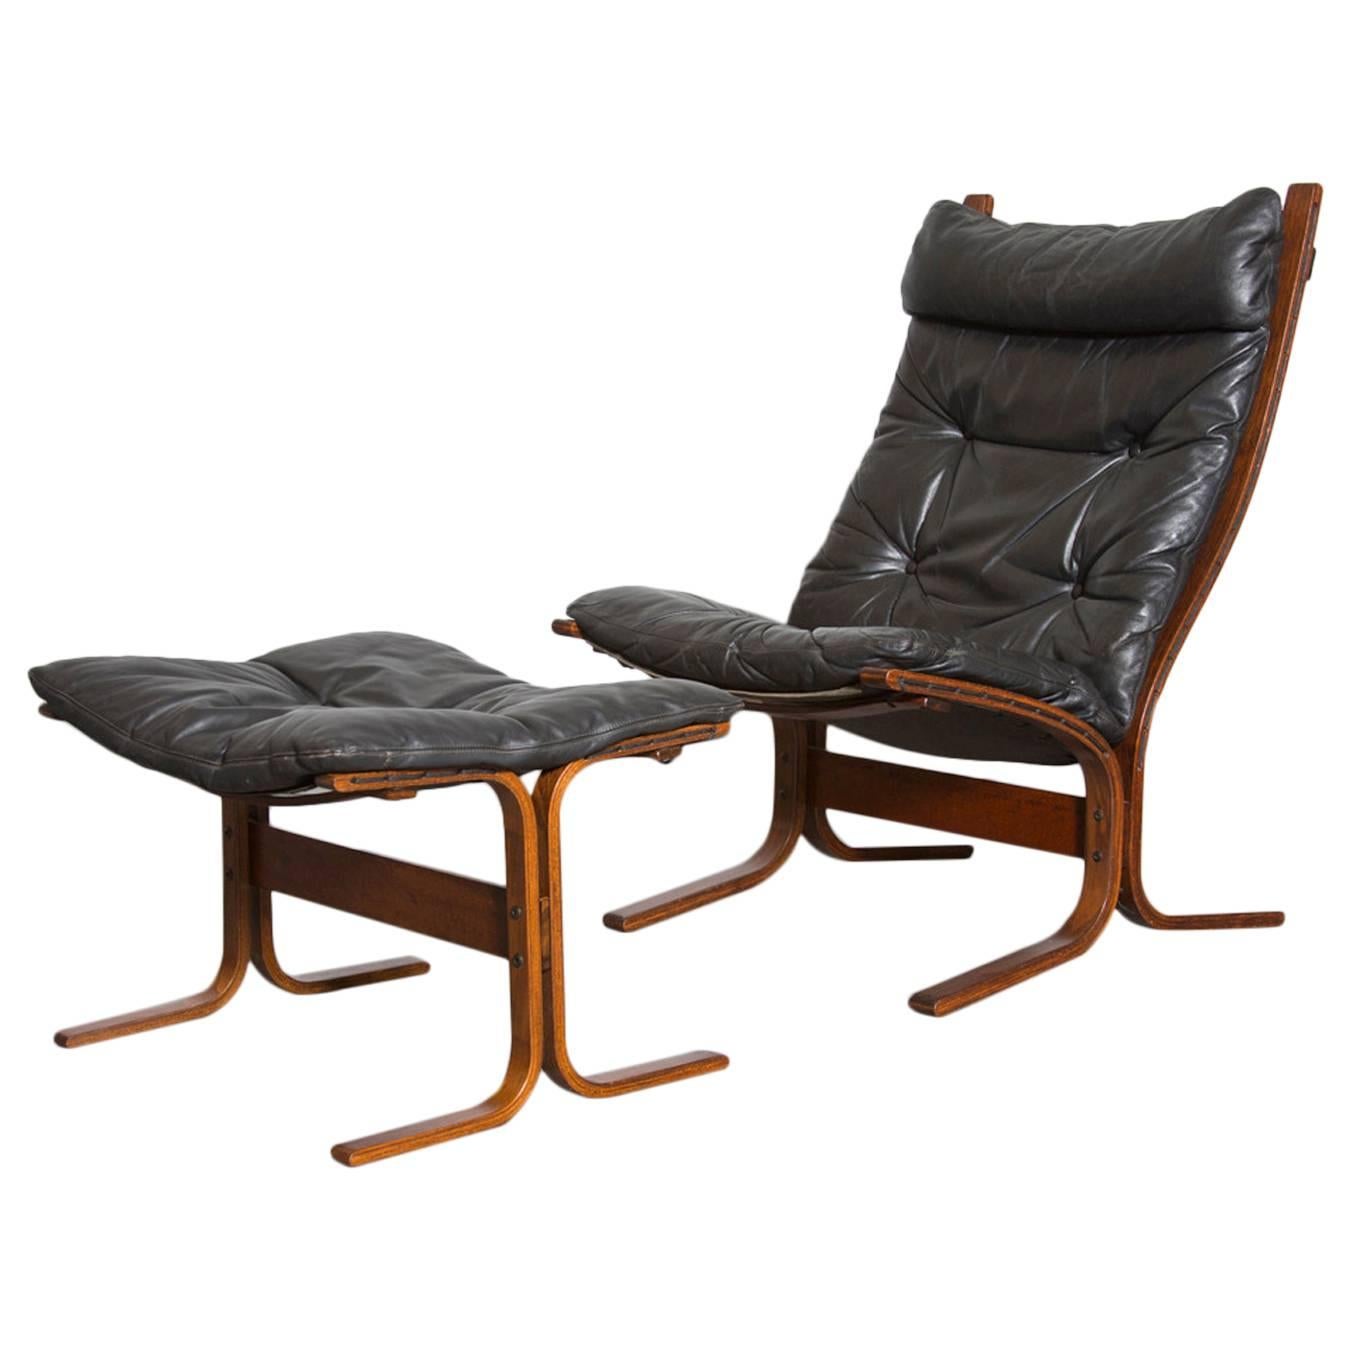 Westnofa "Siesta" Lounge Chair and Ottoman